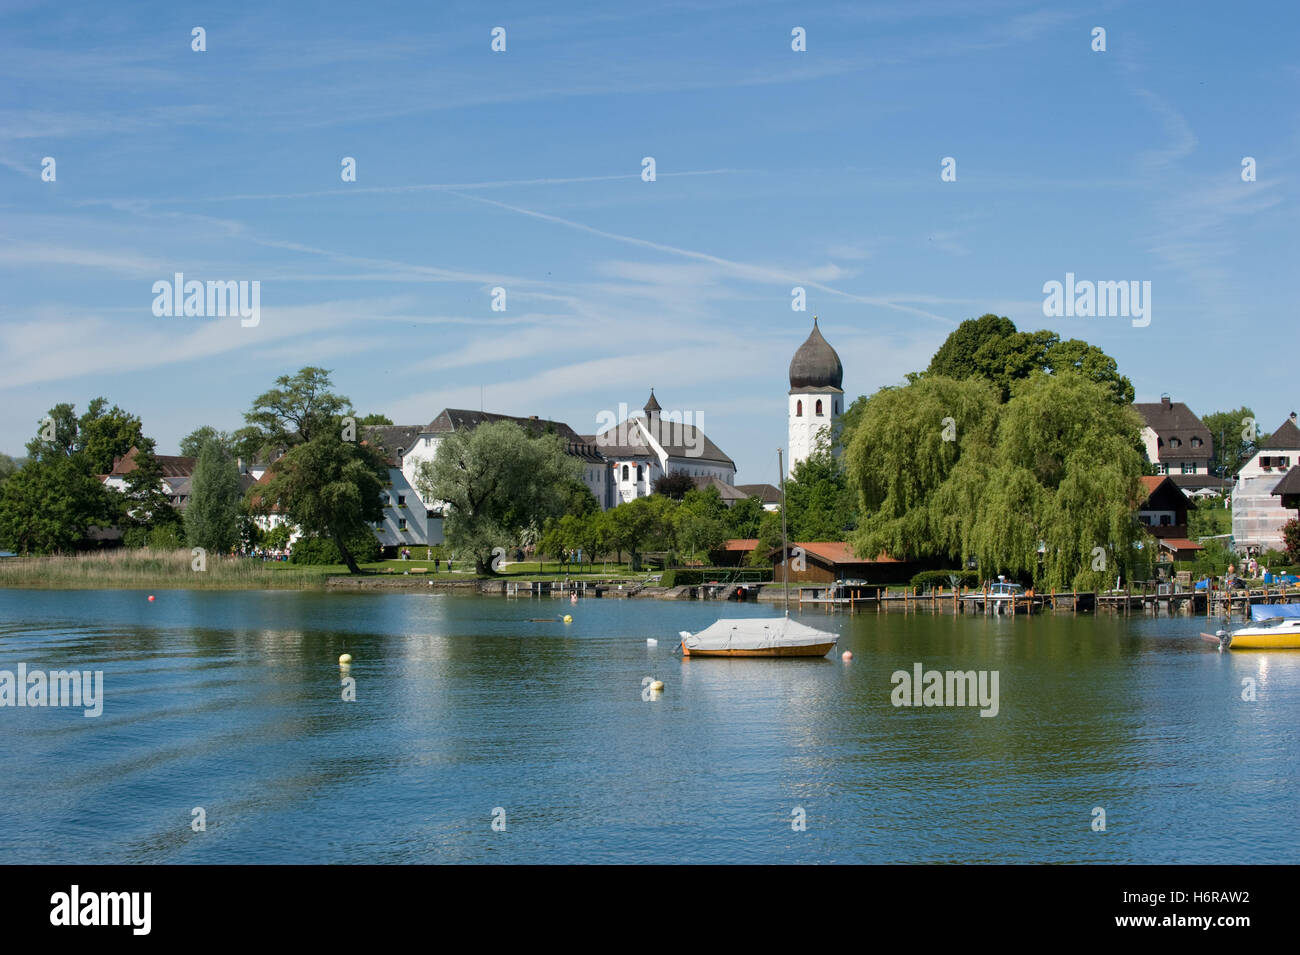 Paisaje horizontal fotografías e imágenes de alta resolución - Alamy